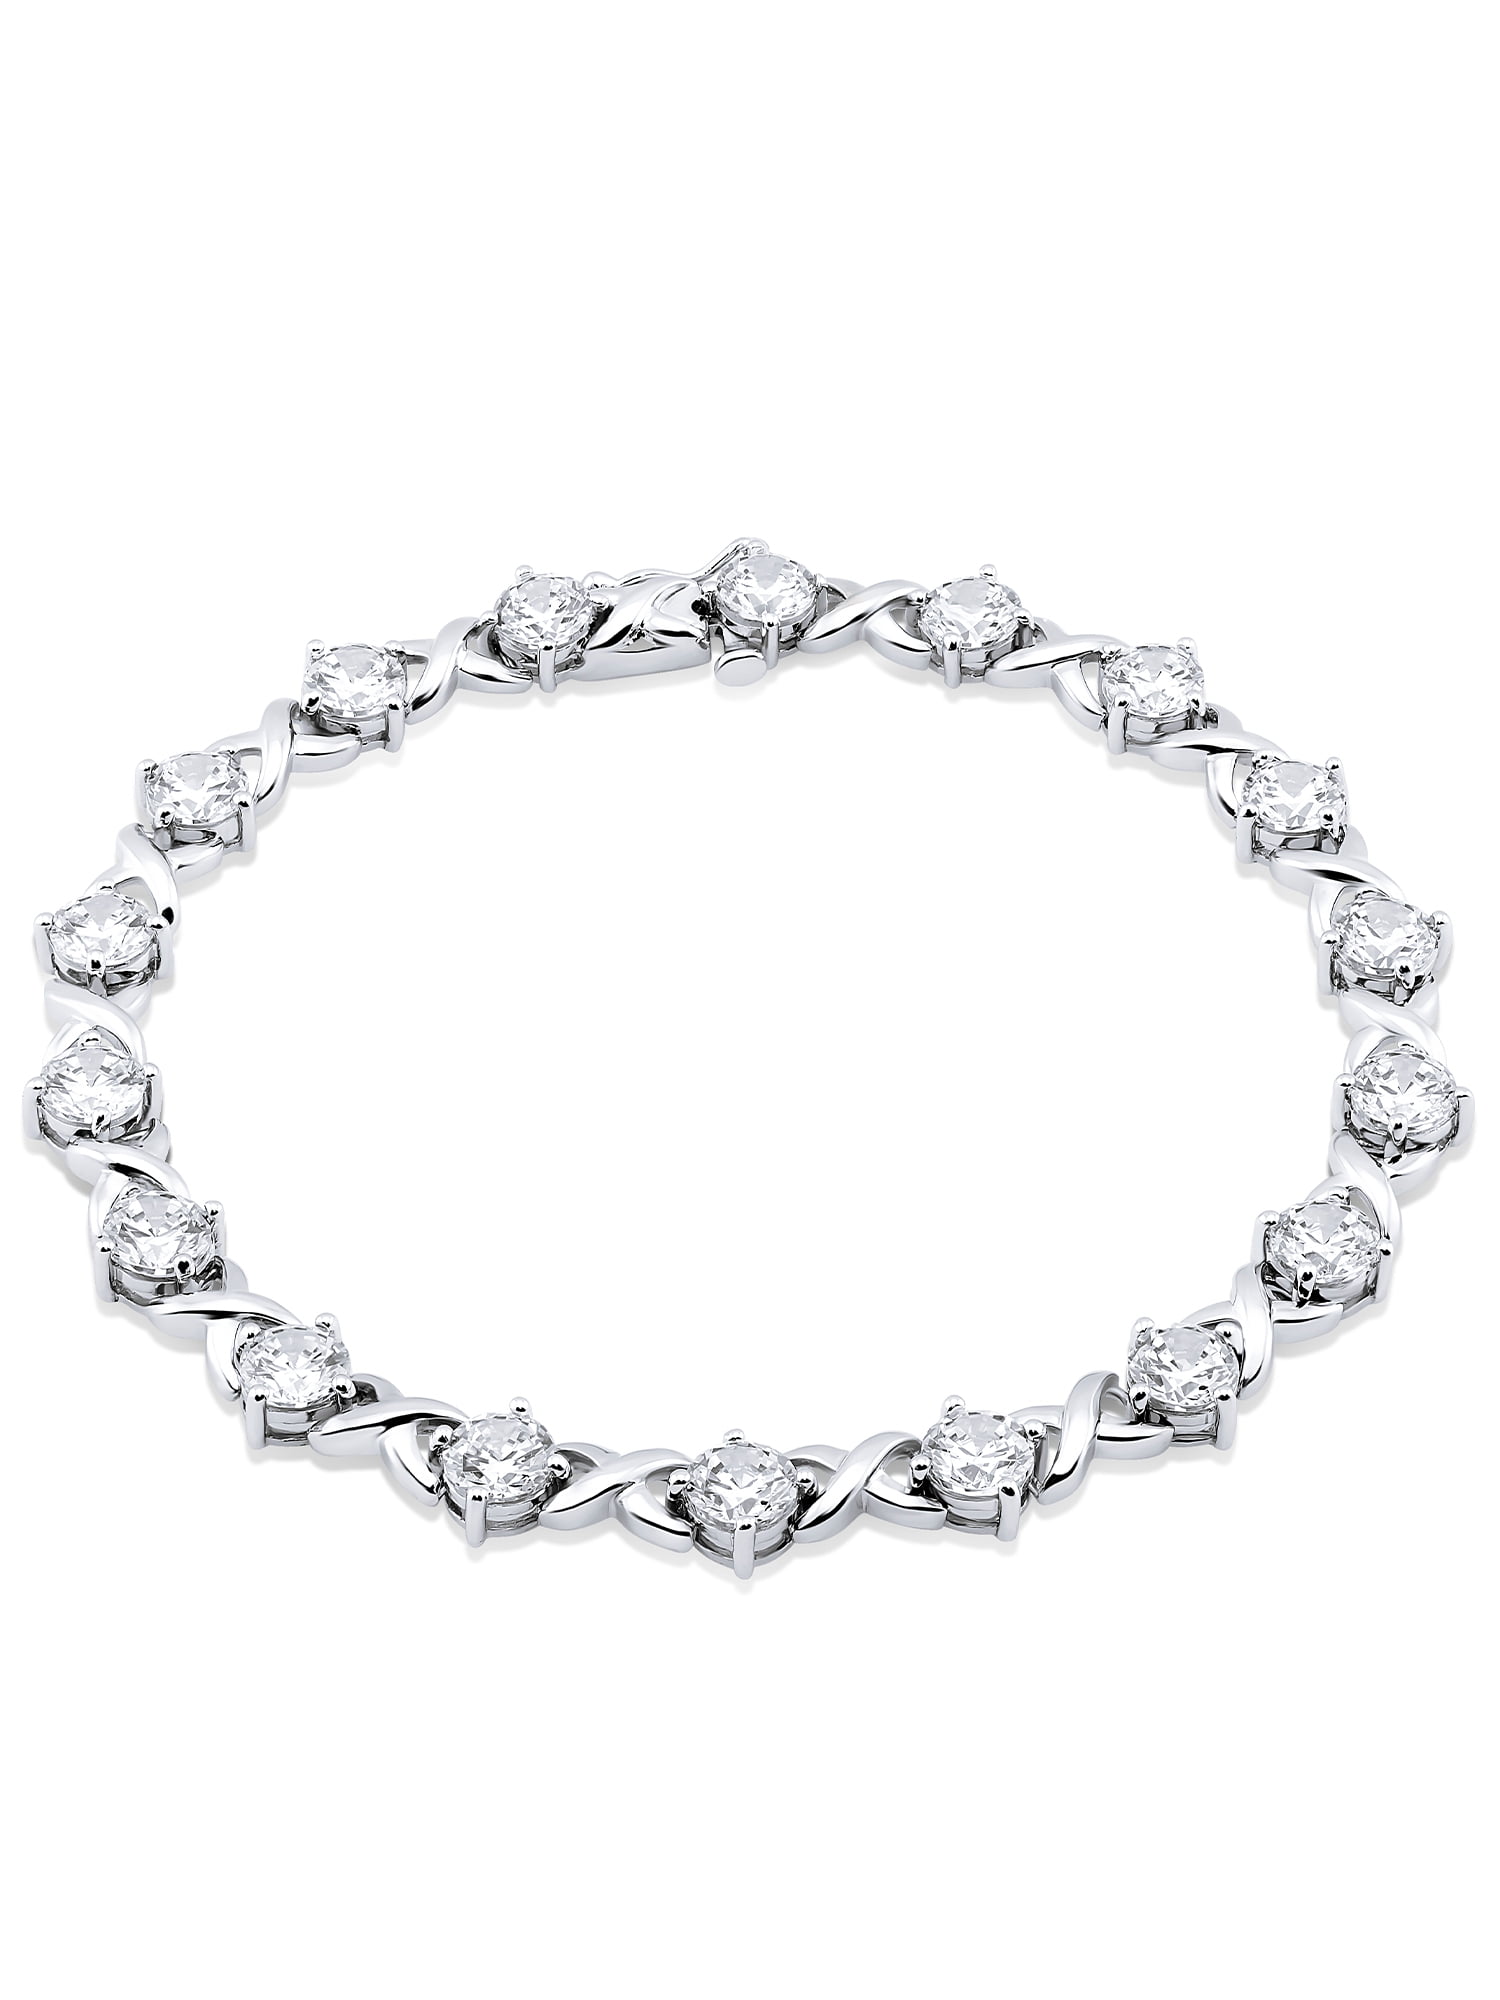 Buy ZAVERI PEARLS Silver Tone Sparkling American Diamonds Party Bling  Bracelet For Women-ZPFK10309 at Amazon.in